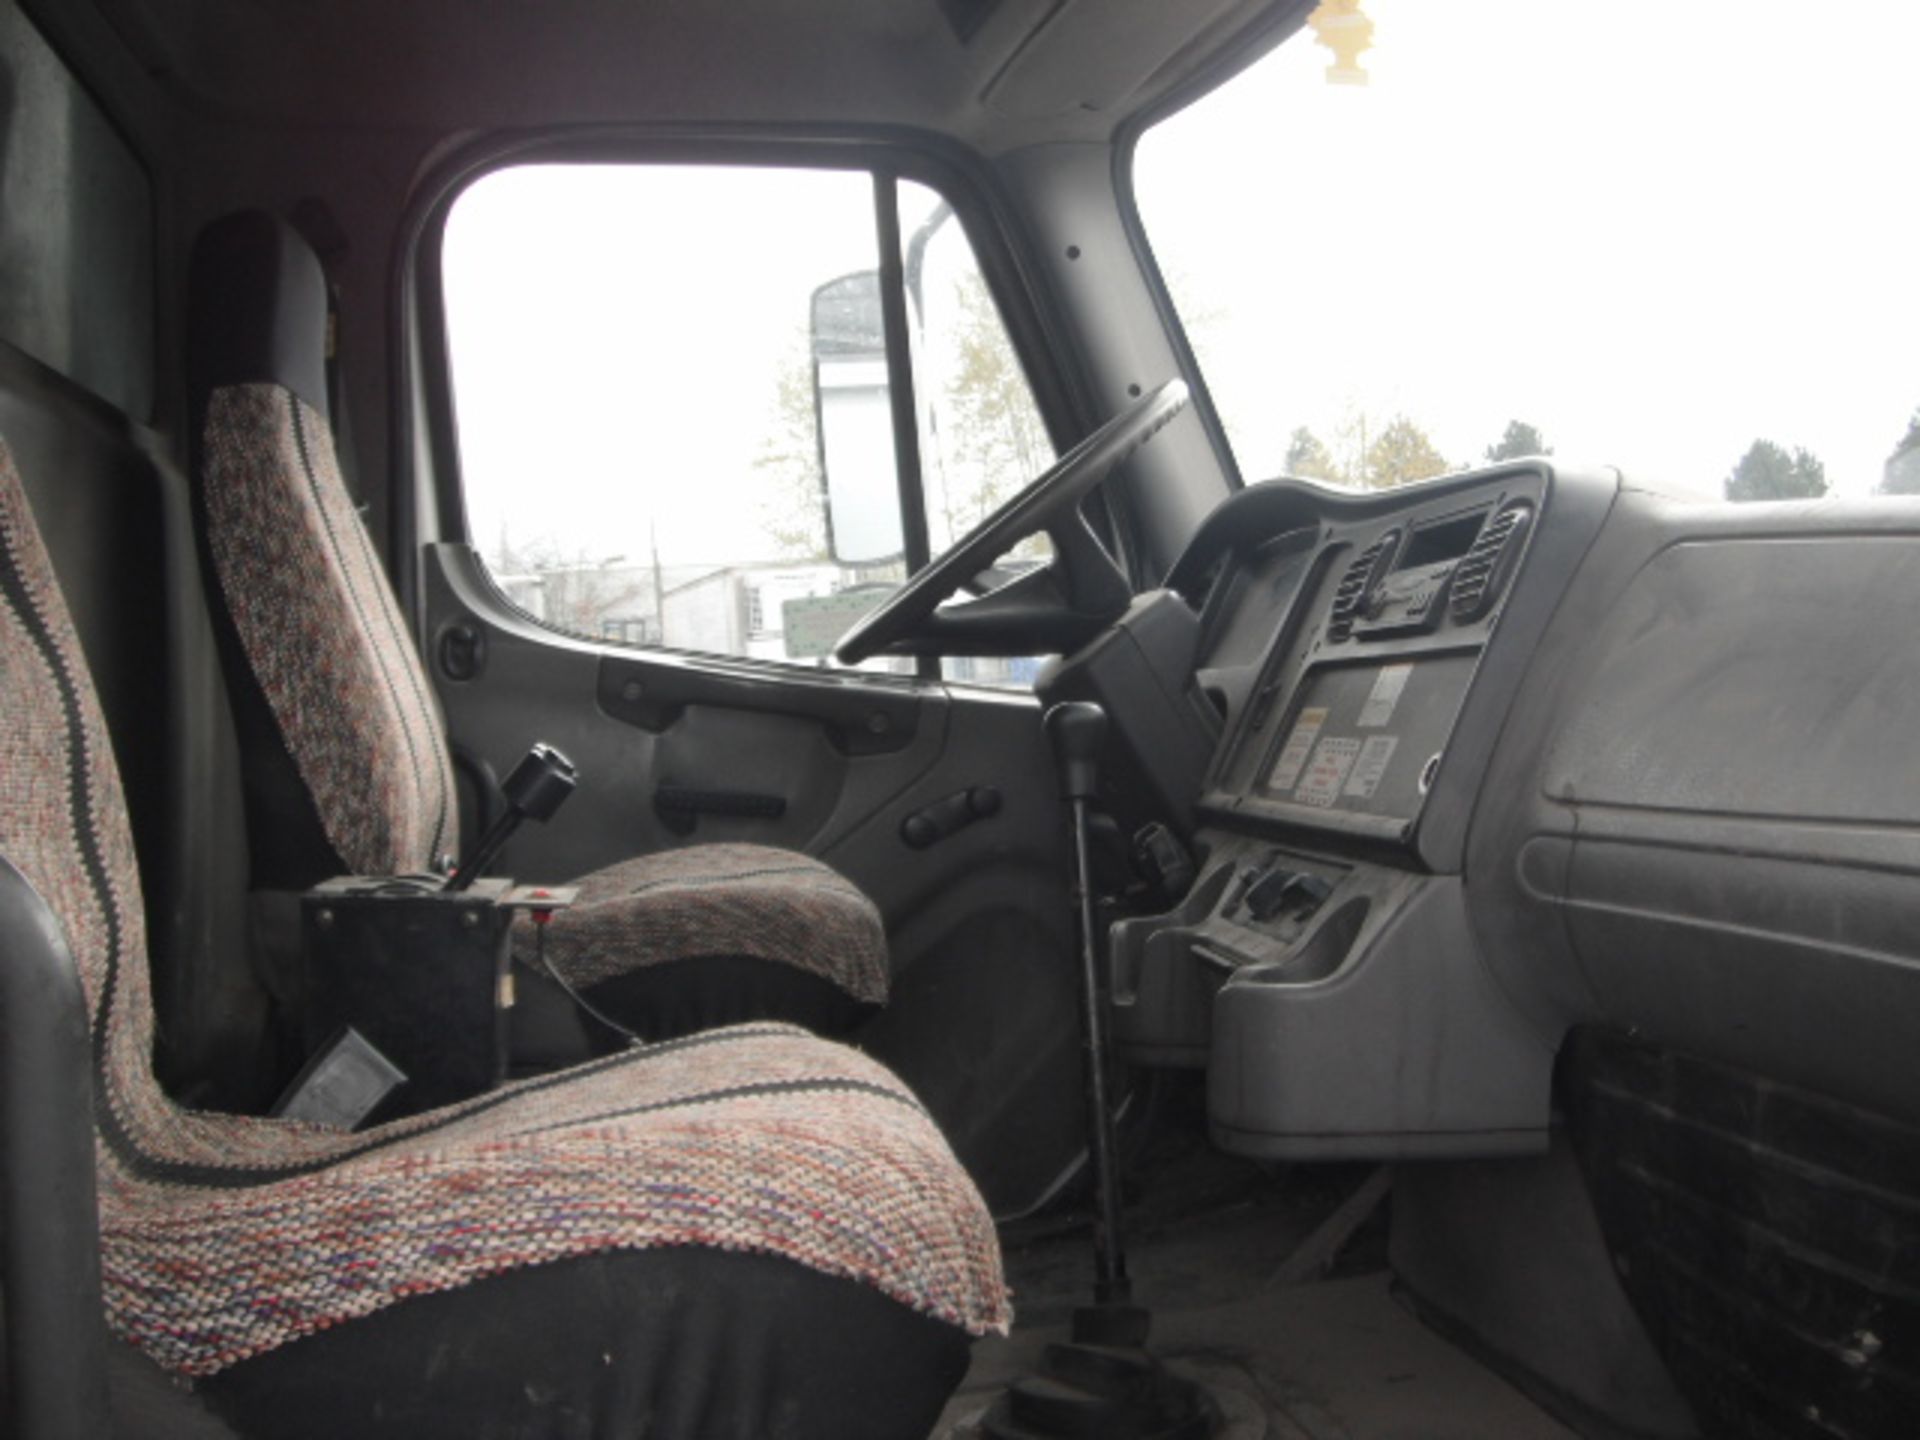 2005 Freightliner M2 Dump Truck (43082) - Image 5 of 6